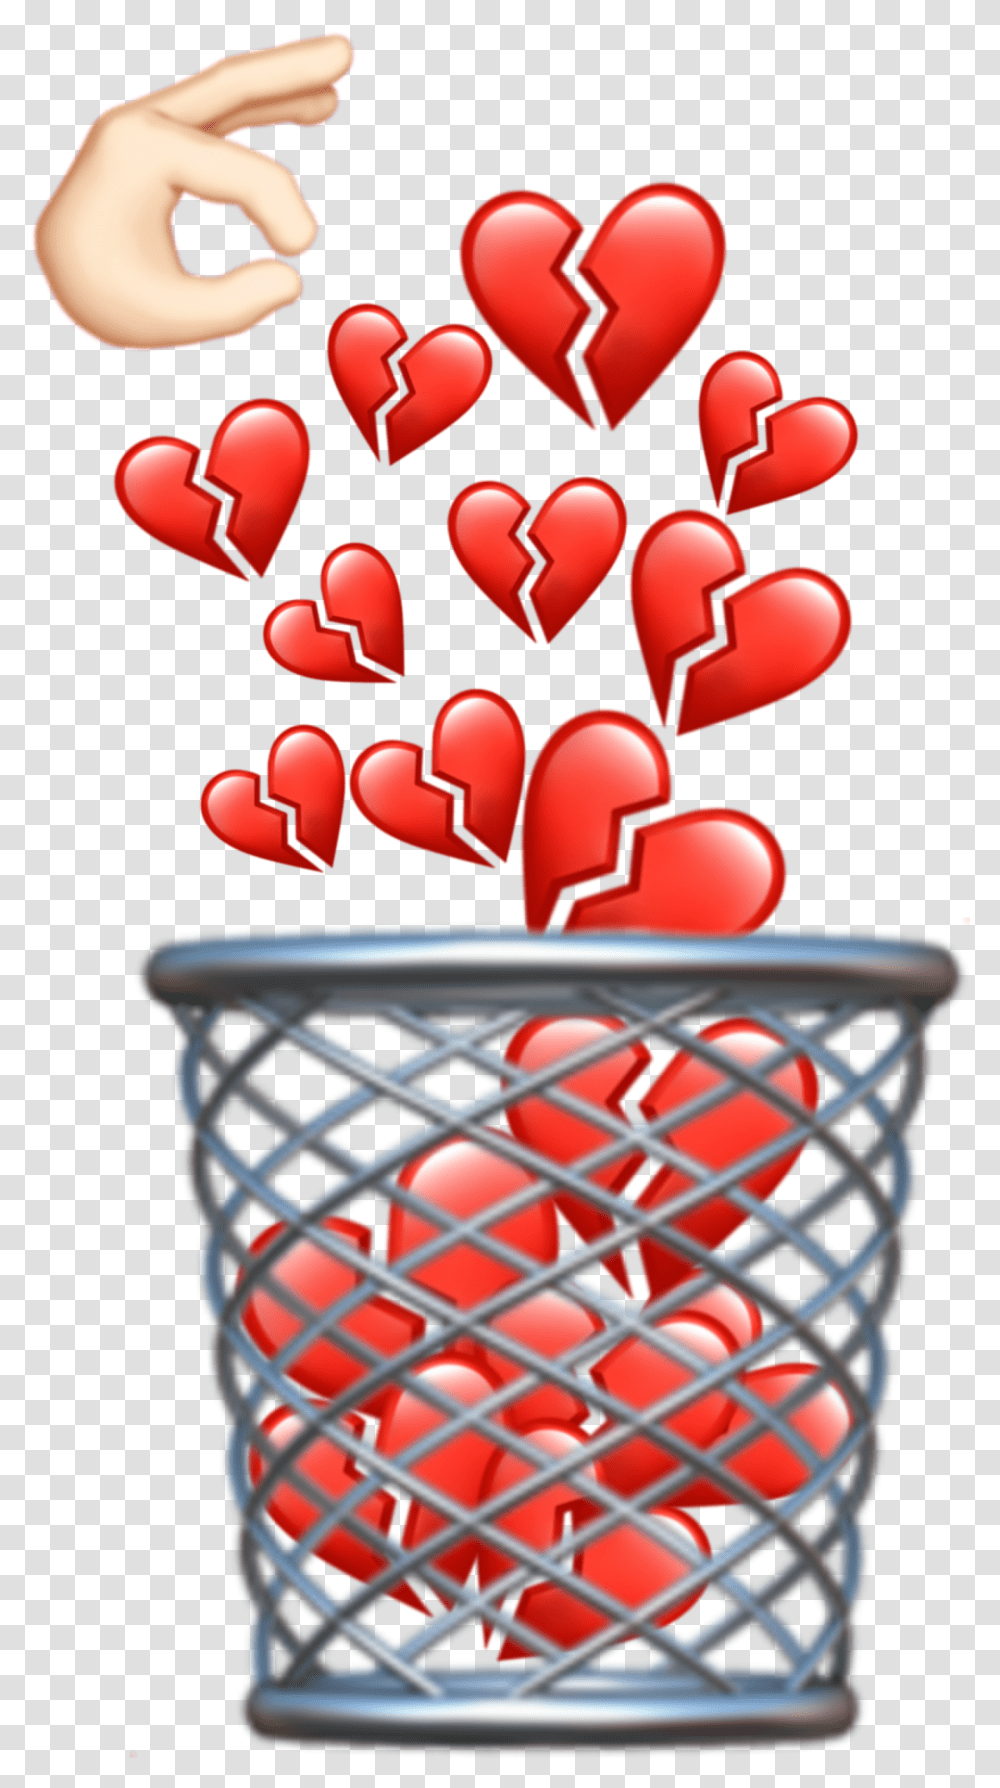 Brokenheart Trash Dump Brokenlove Nolove Trash Can Emoji, Birthday Cake, Food, People, Person Transparent Png